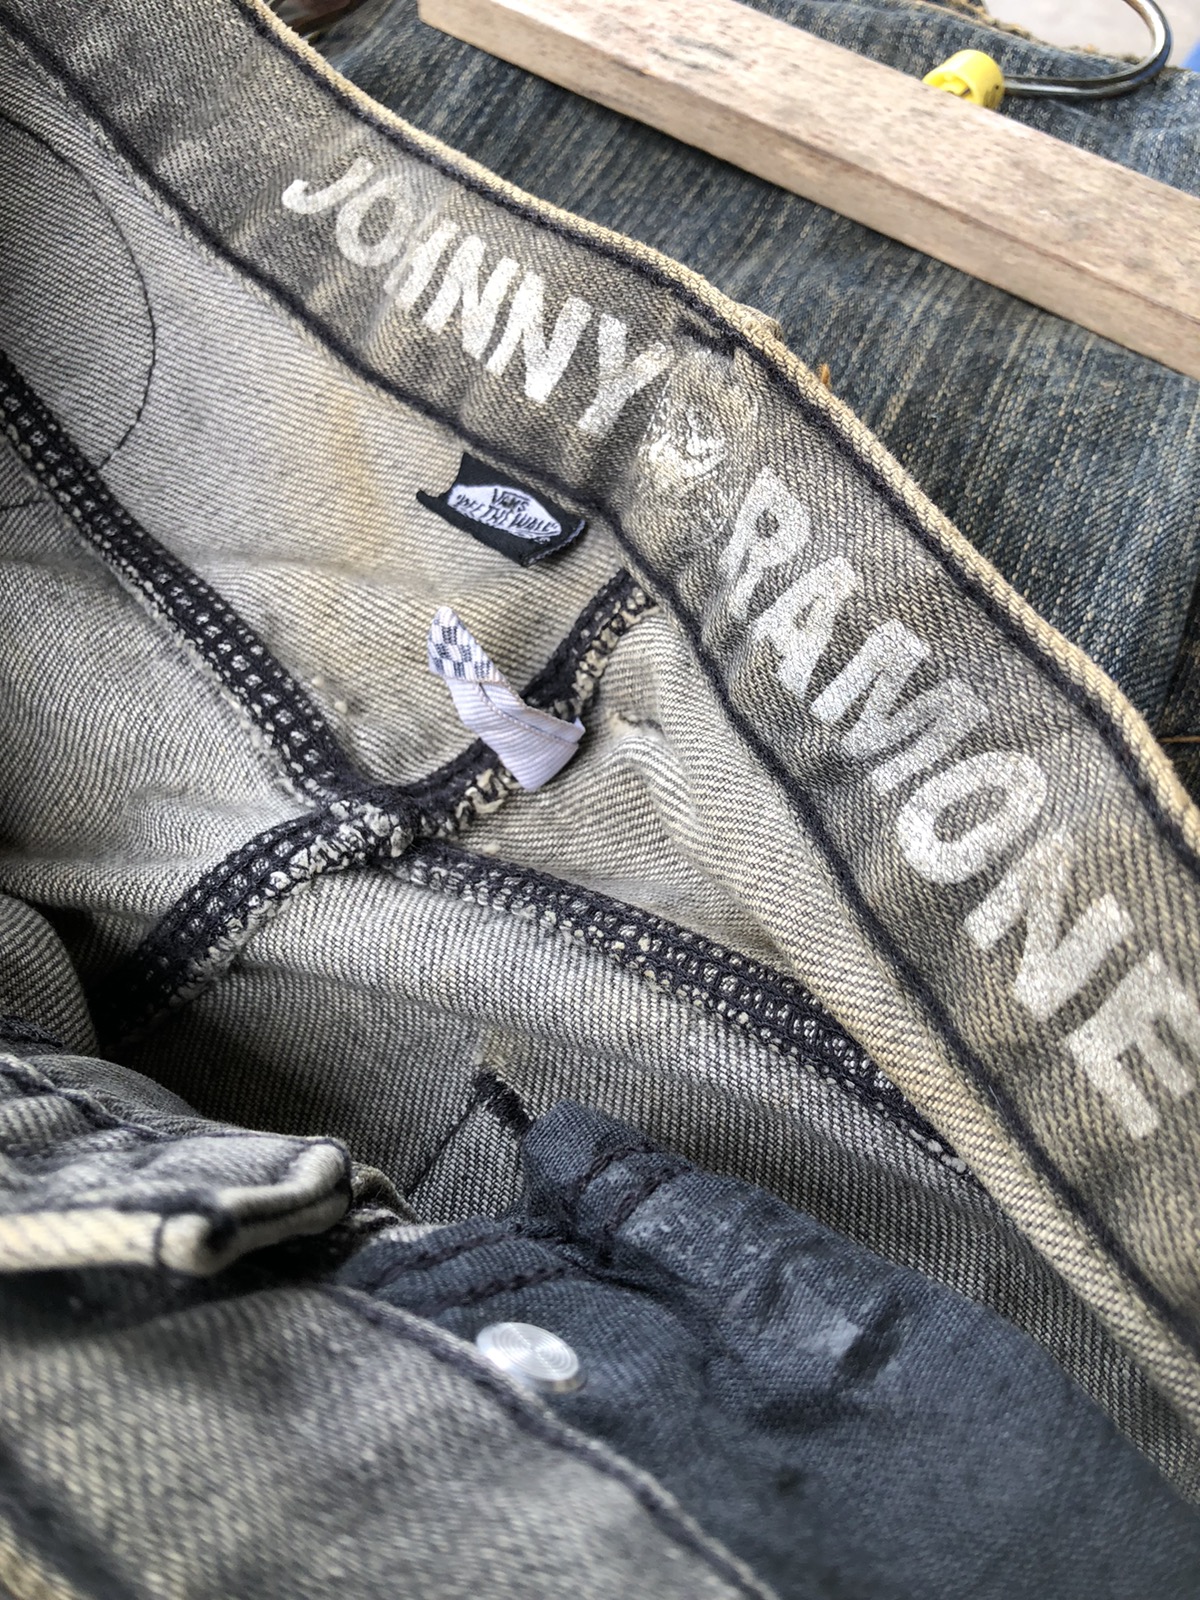 Vans Joey Ramone Black Rusty Washed Distressed Denim Pant - 9